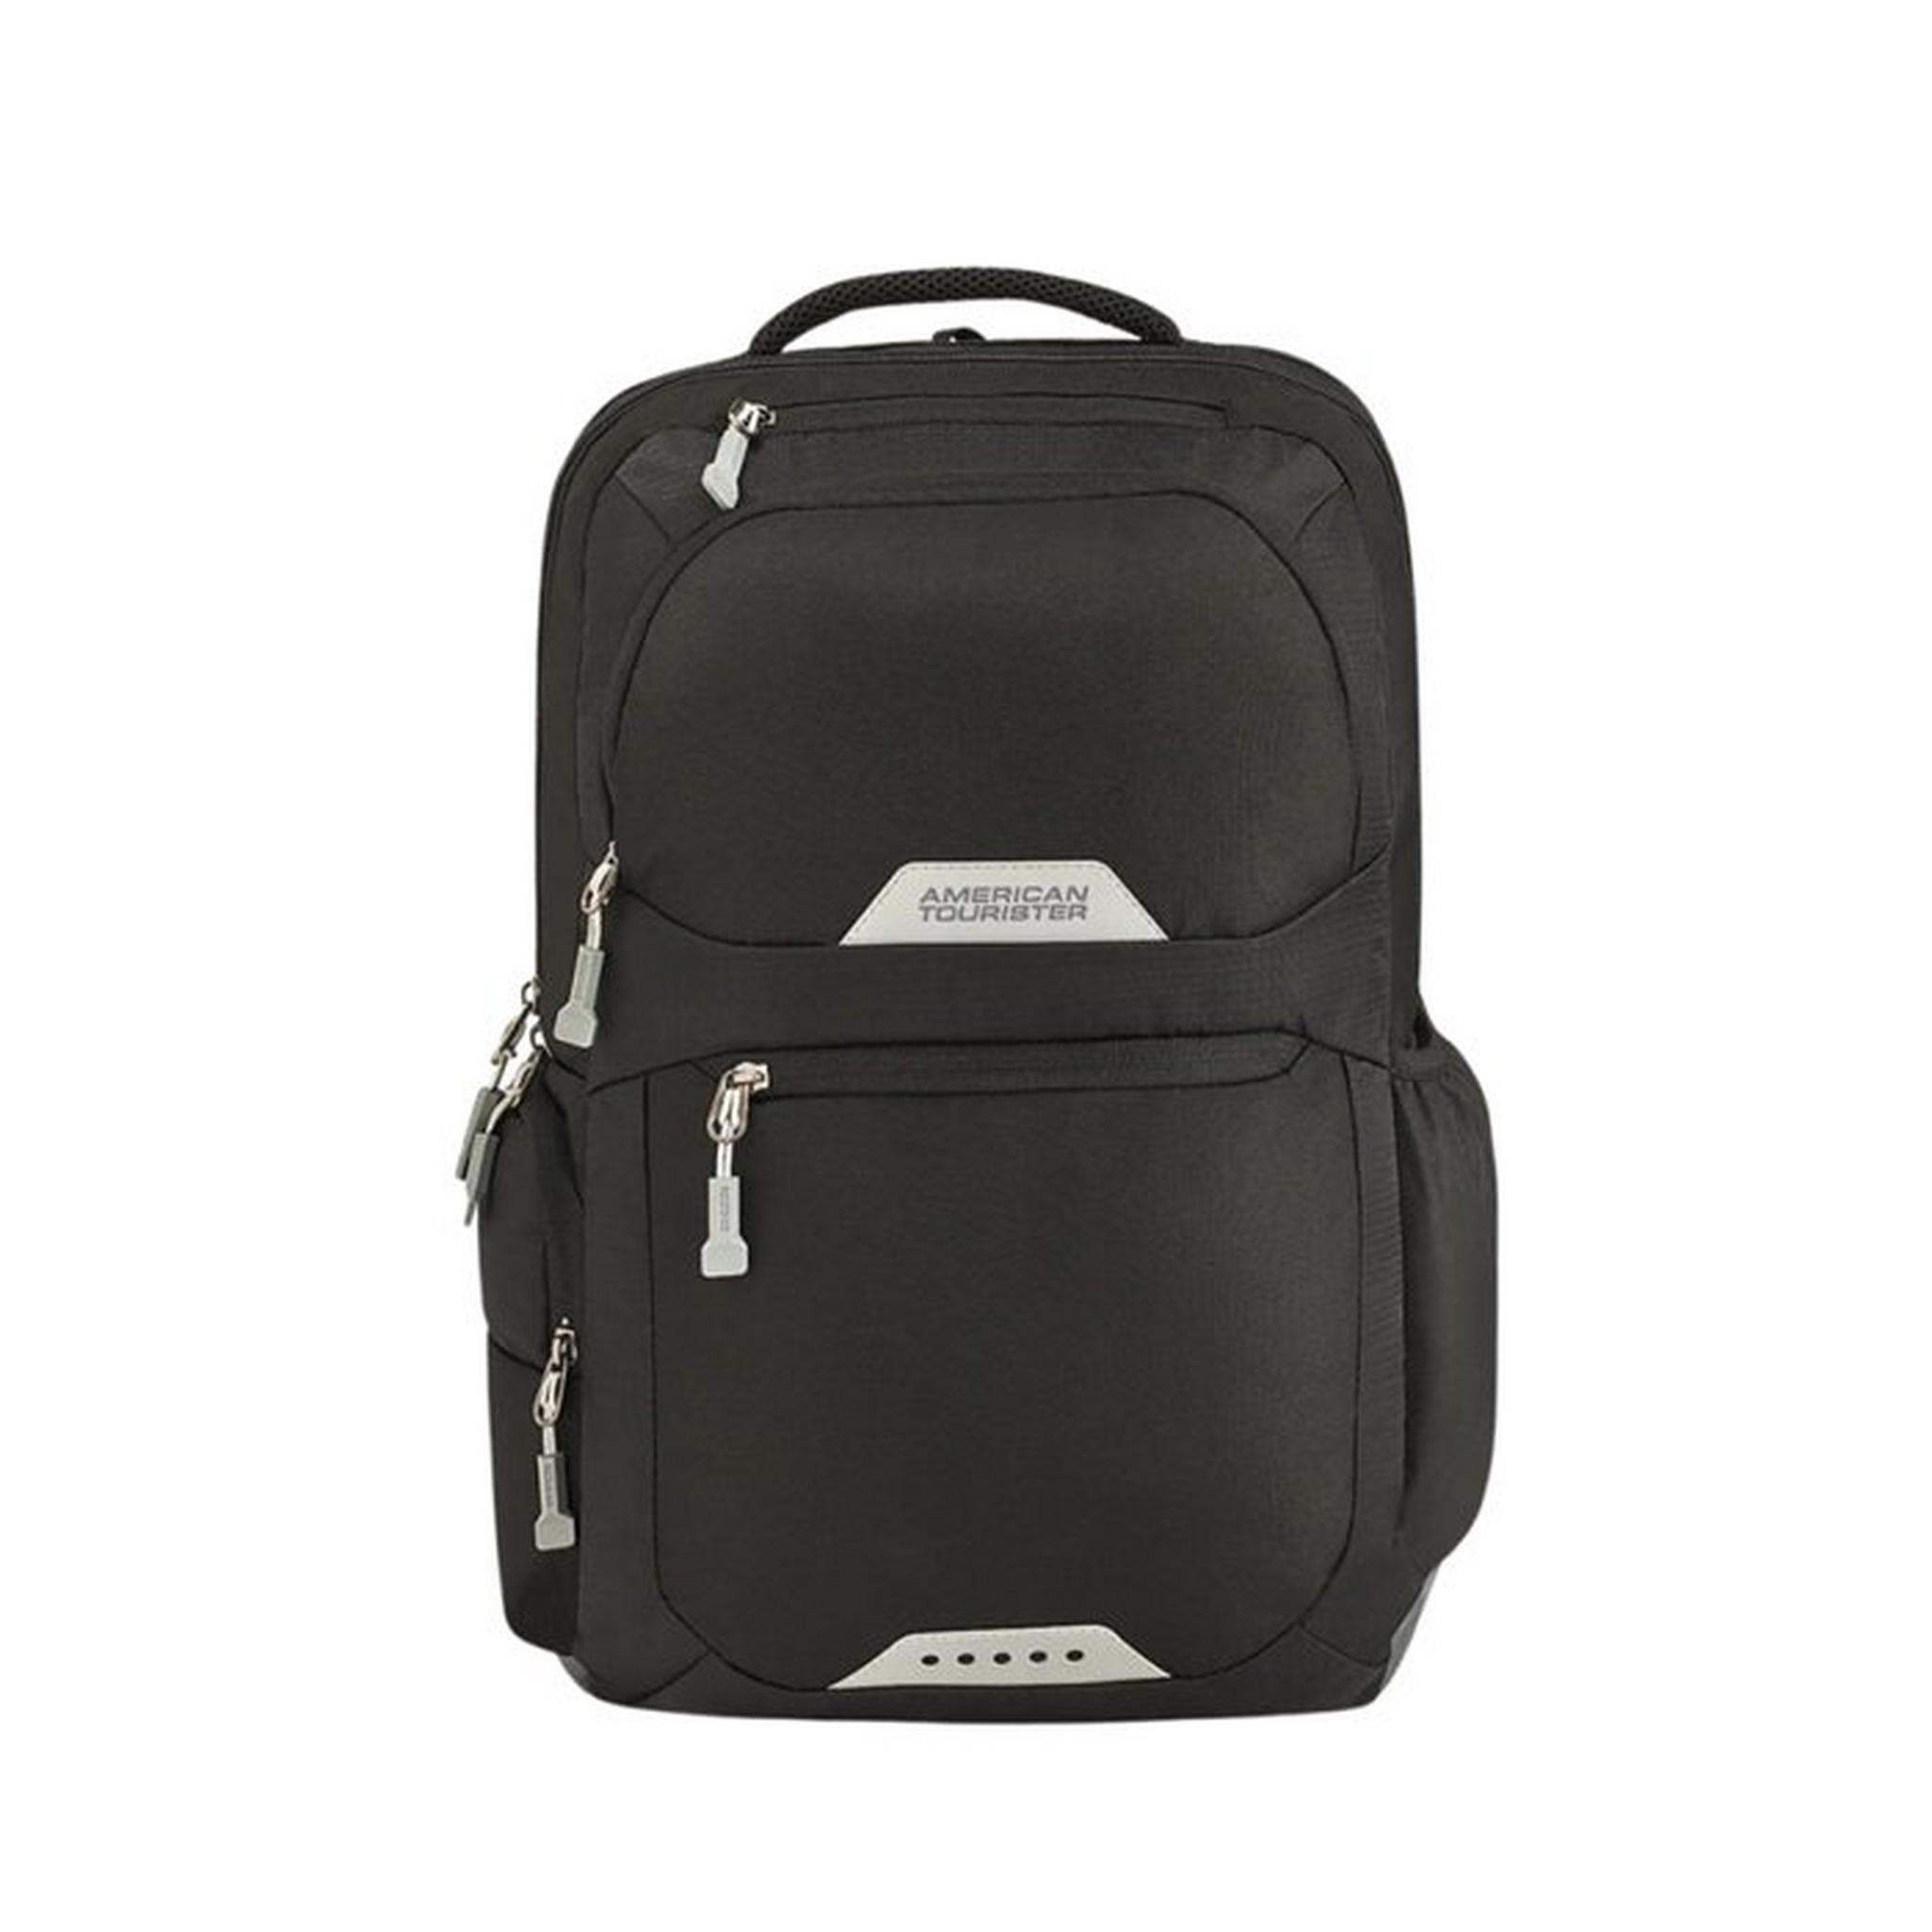 American Tourister Brett 01 Laptop Backpack QI5X09001| Xcite